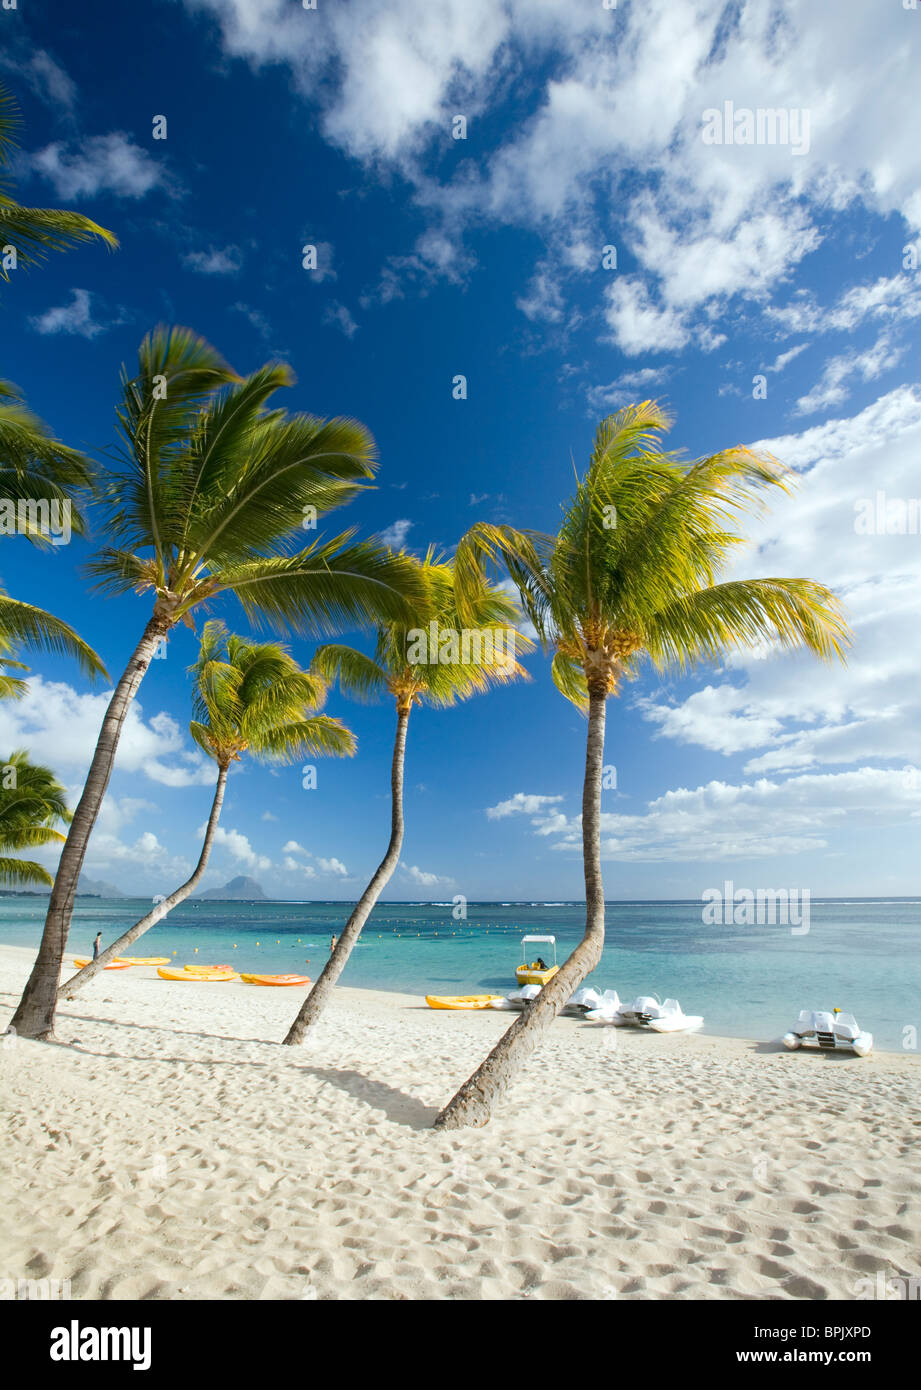 Beach and palm trees, Flic en Flac, Mauritius Stock Photo